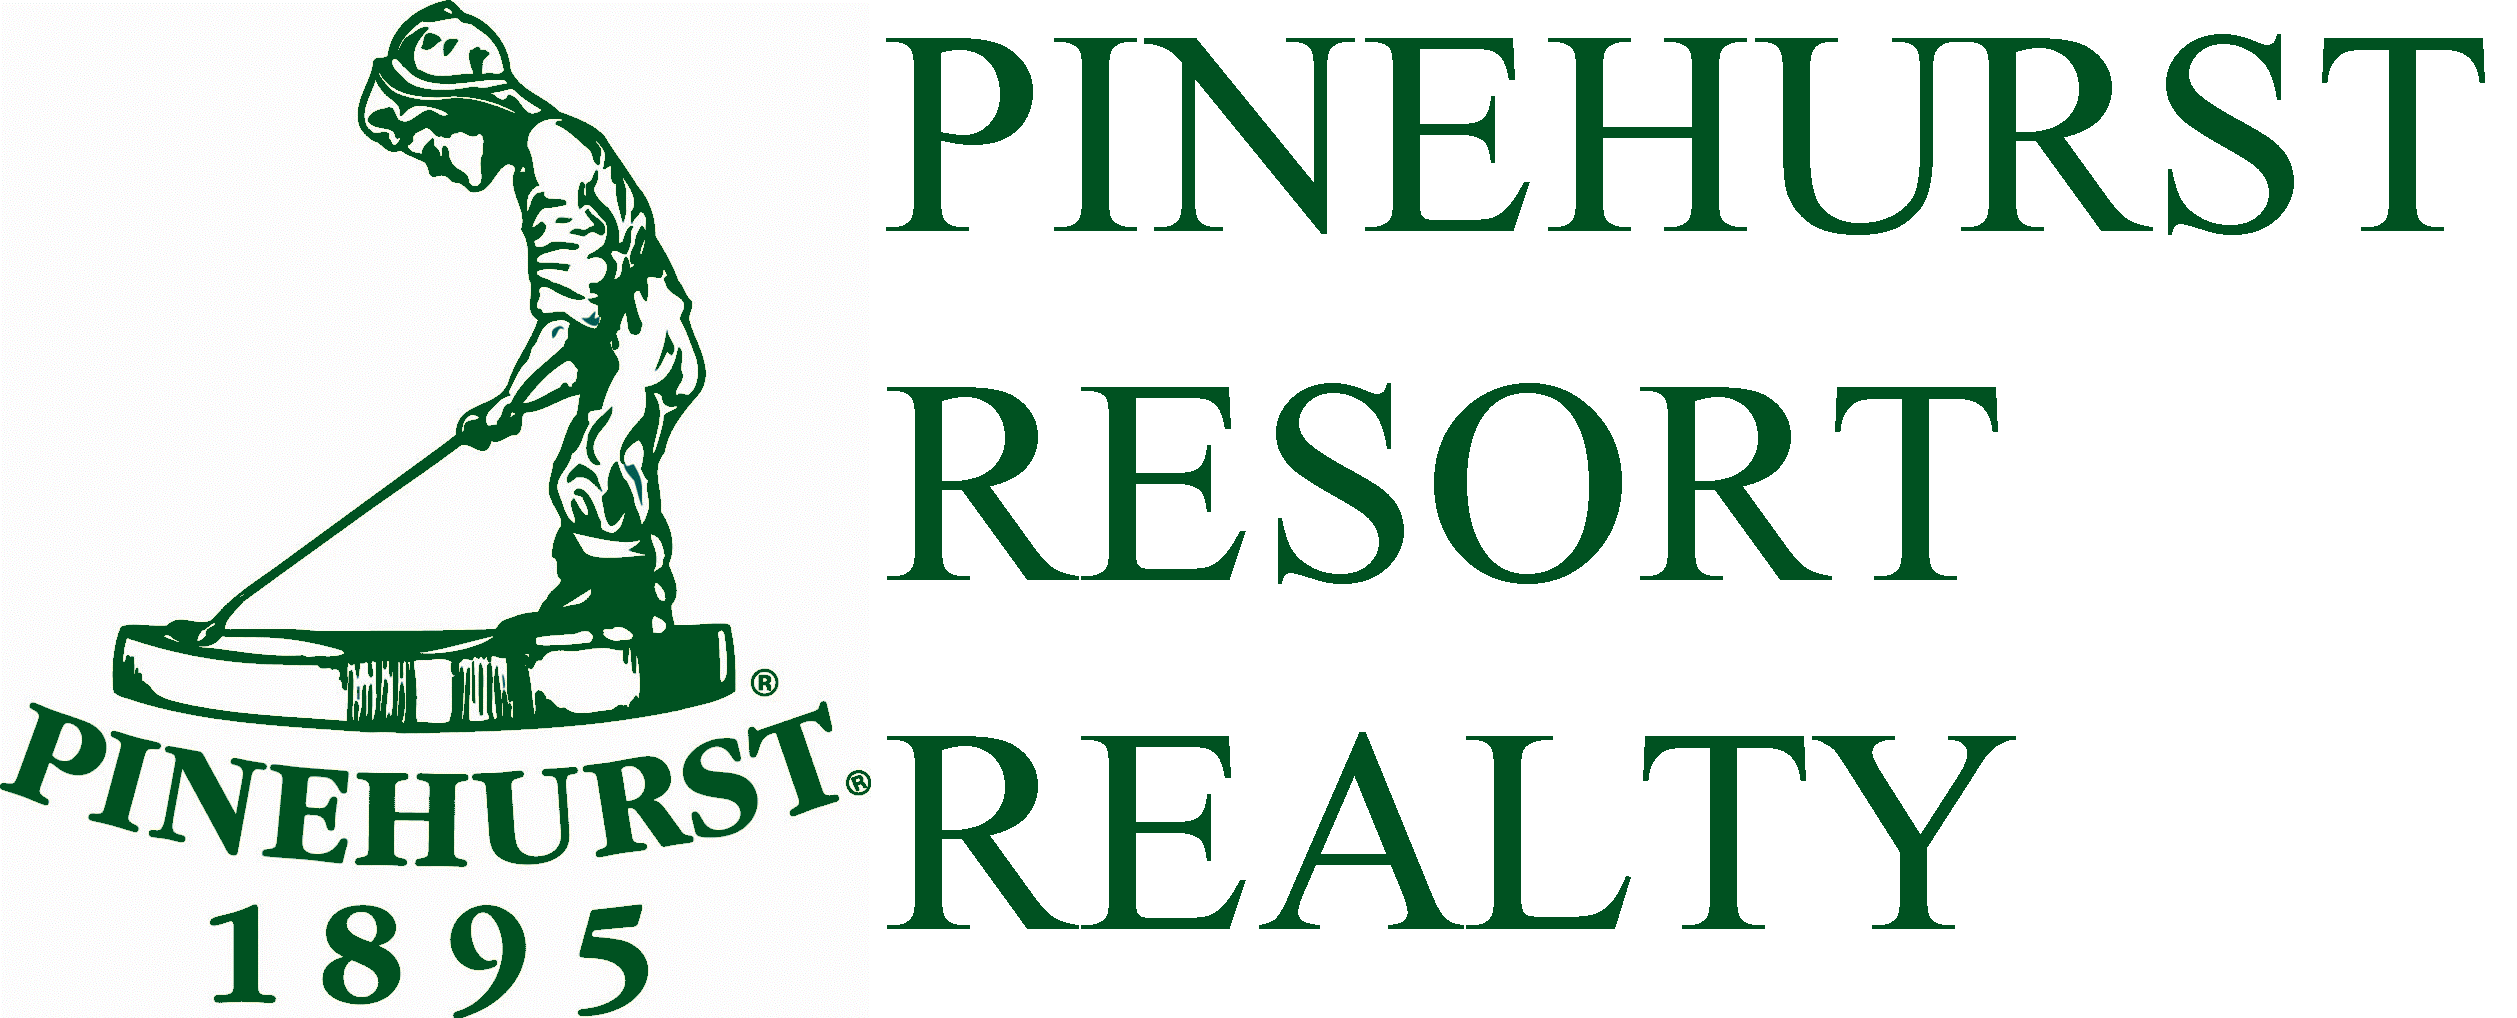 Pinehurst Logo - Pinehurst Logos